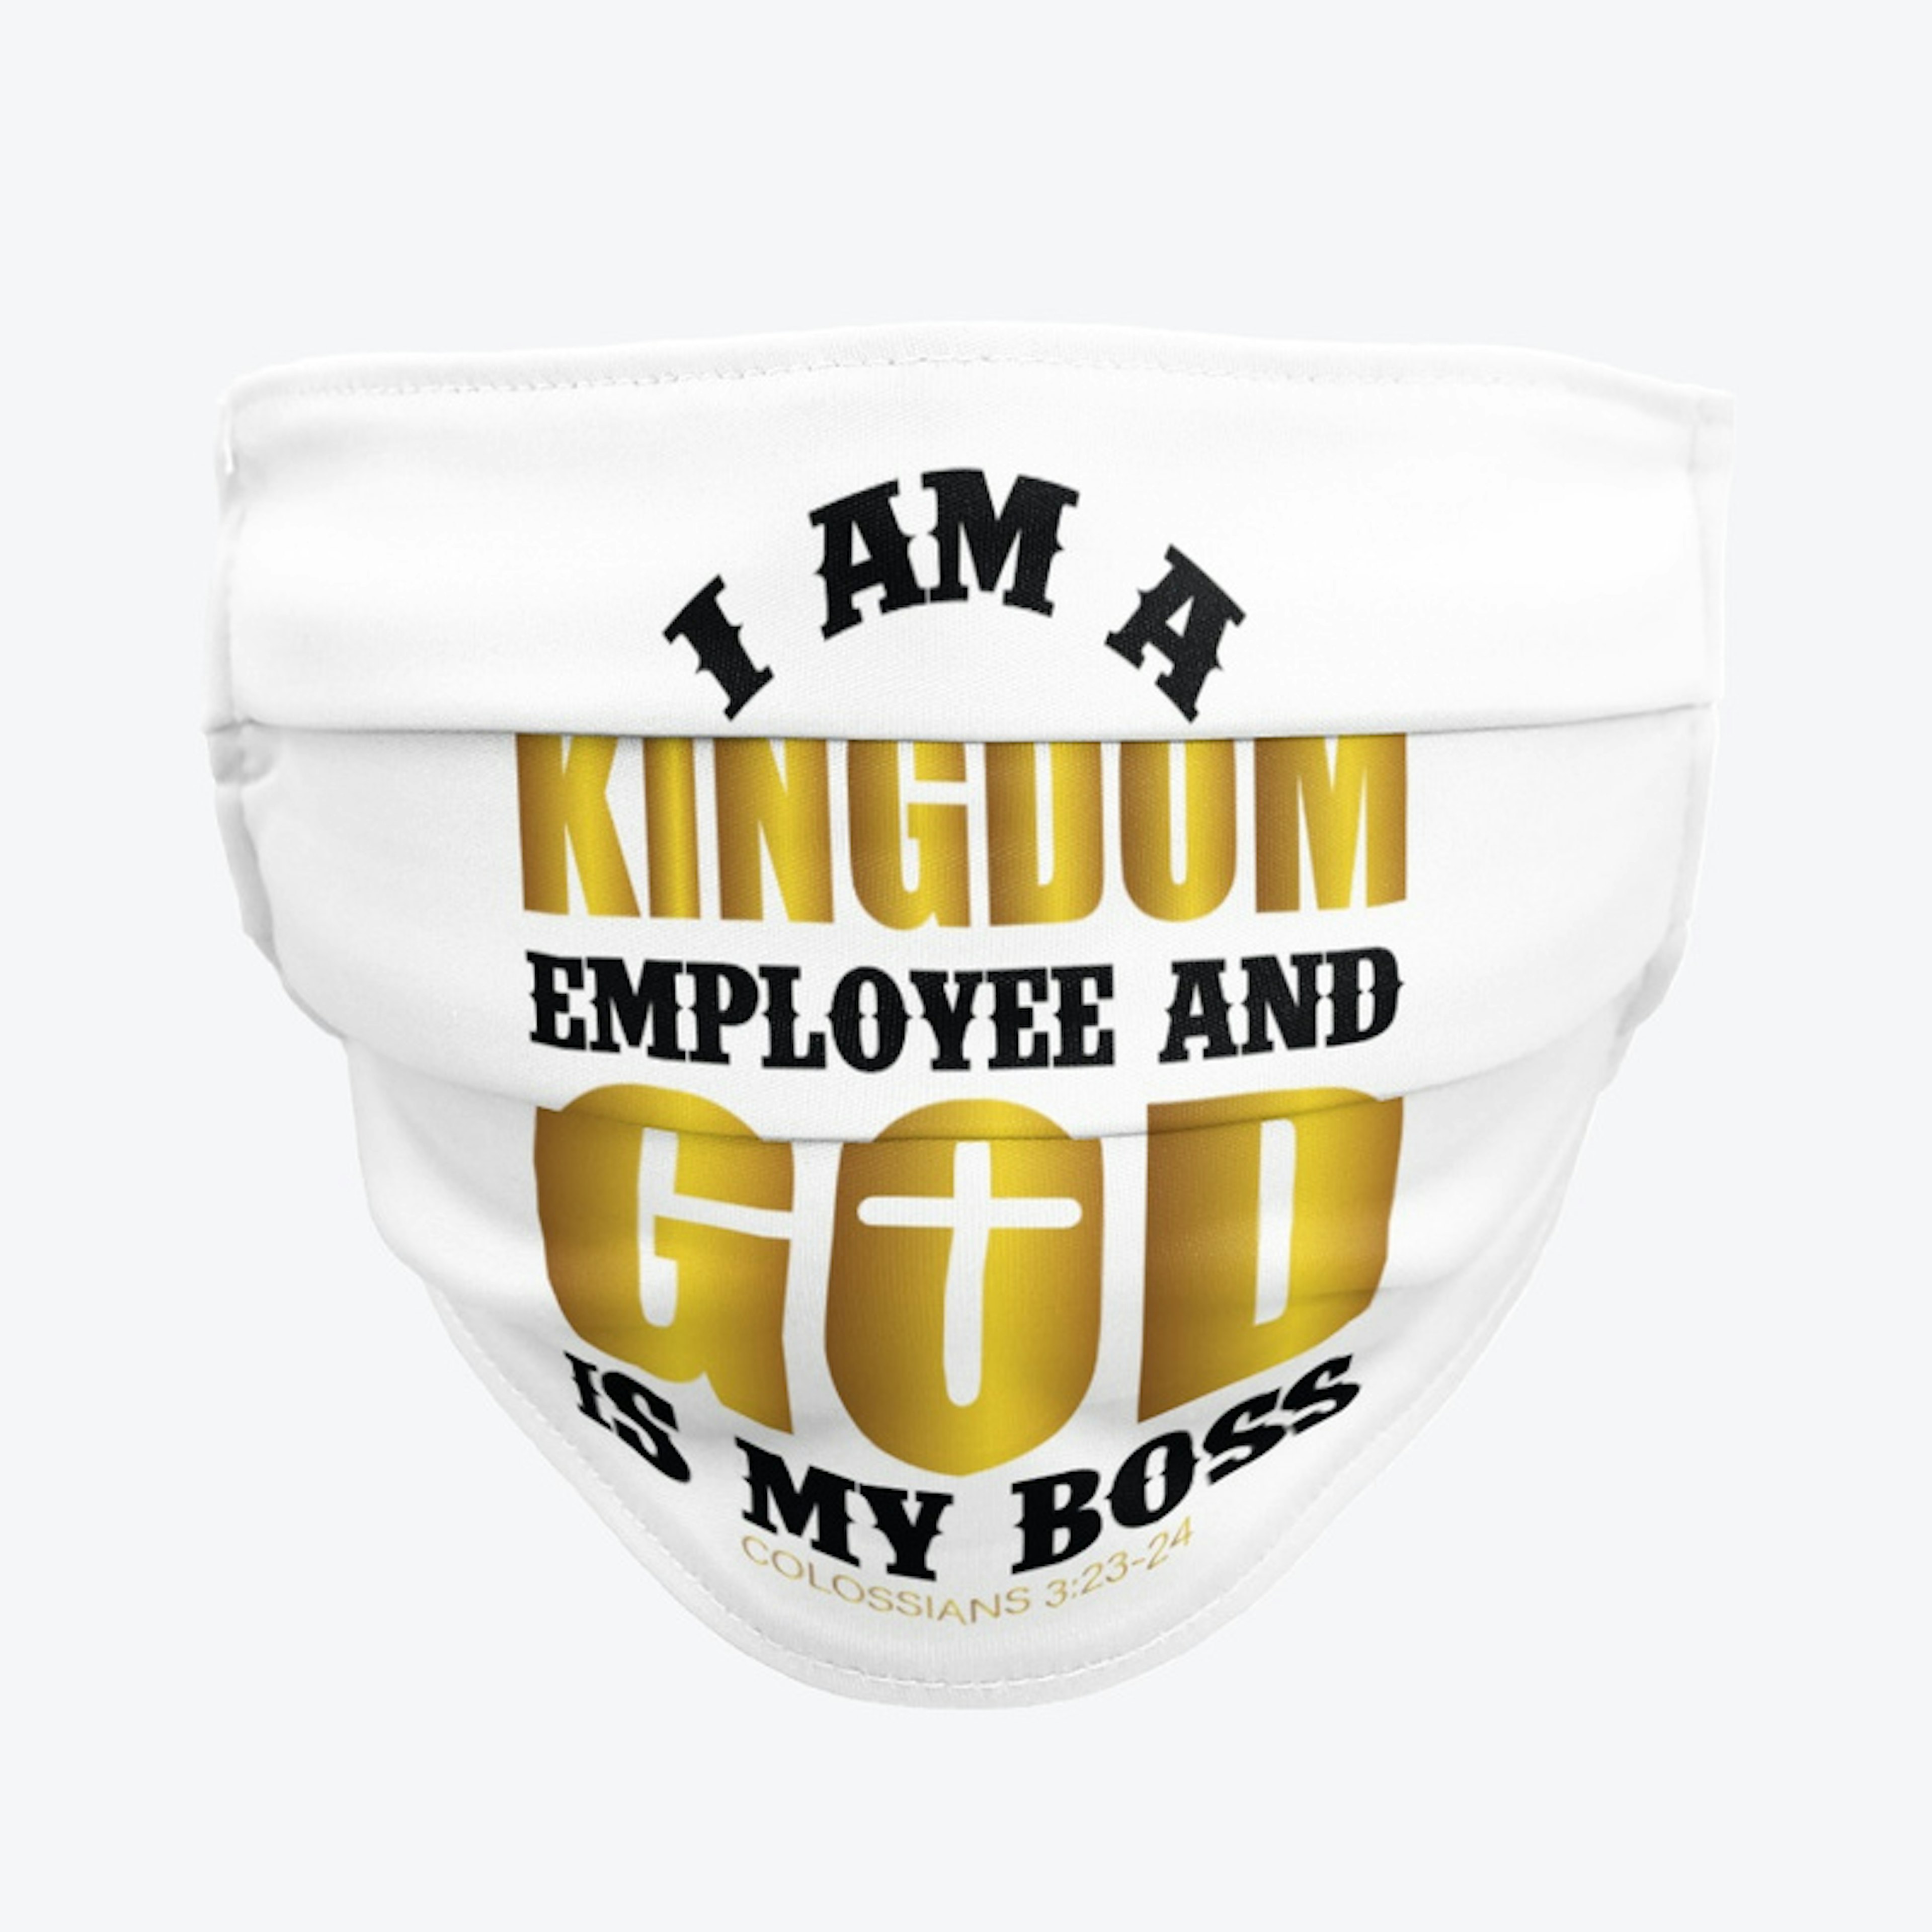 I am a kingdom employee